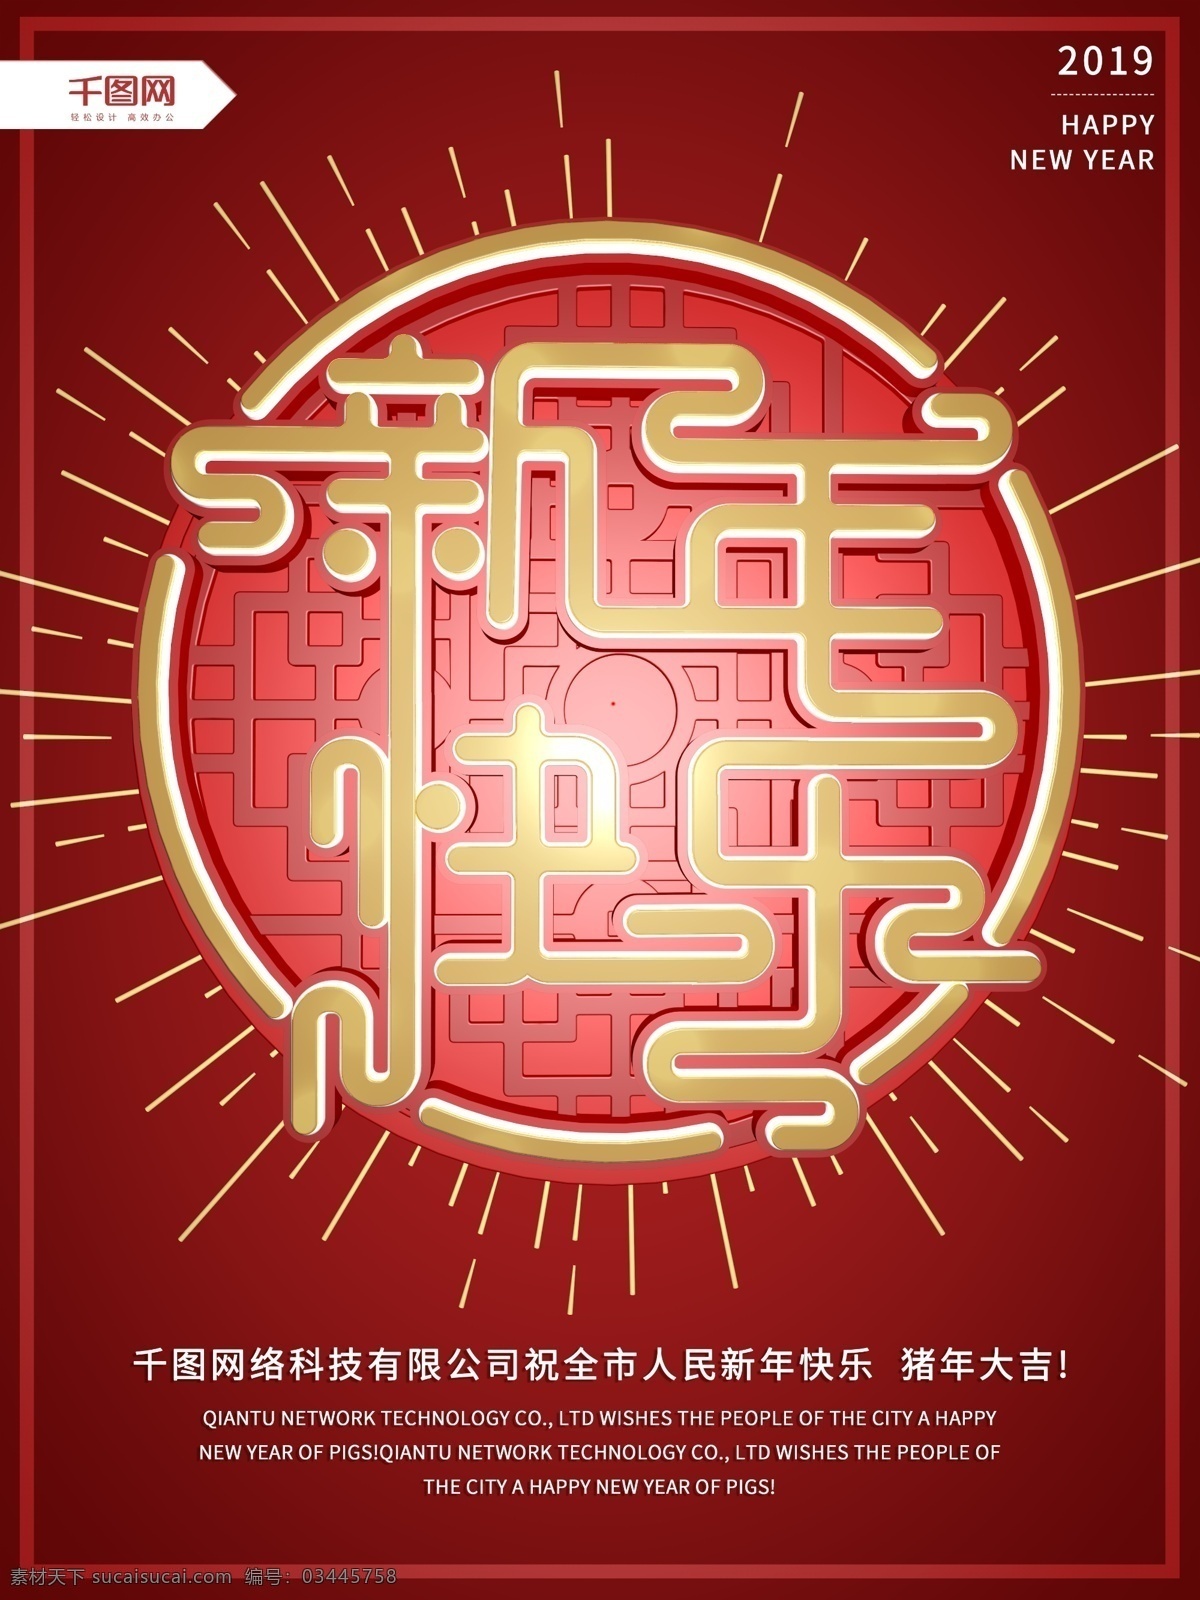 c4d 红色 简约 新年 快乐 企业 宣传海报 超市 促销 节日 新年快乐 2019 企业宣传 烟花 商场 宣传图